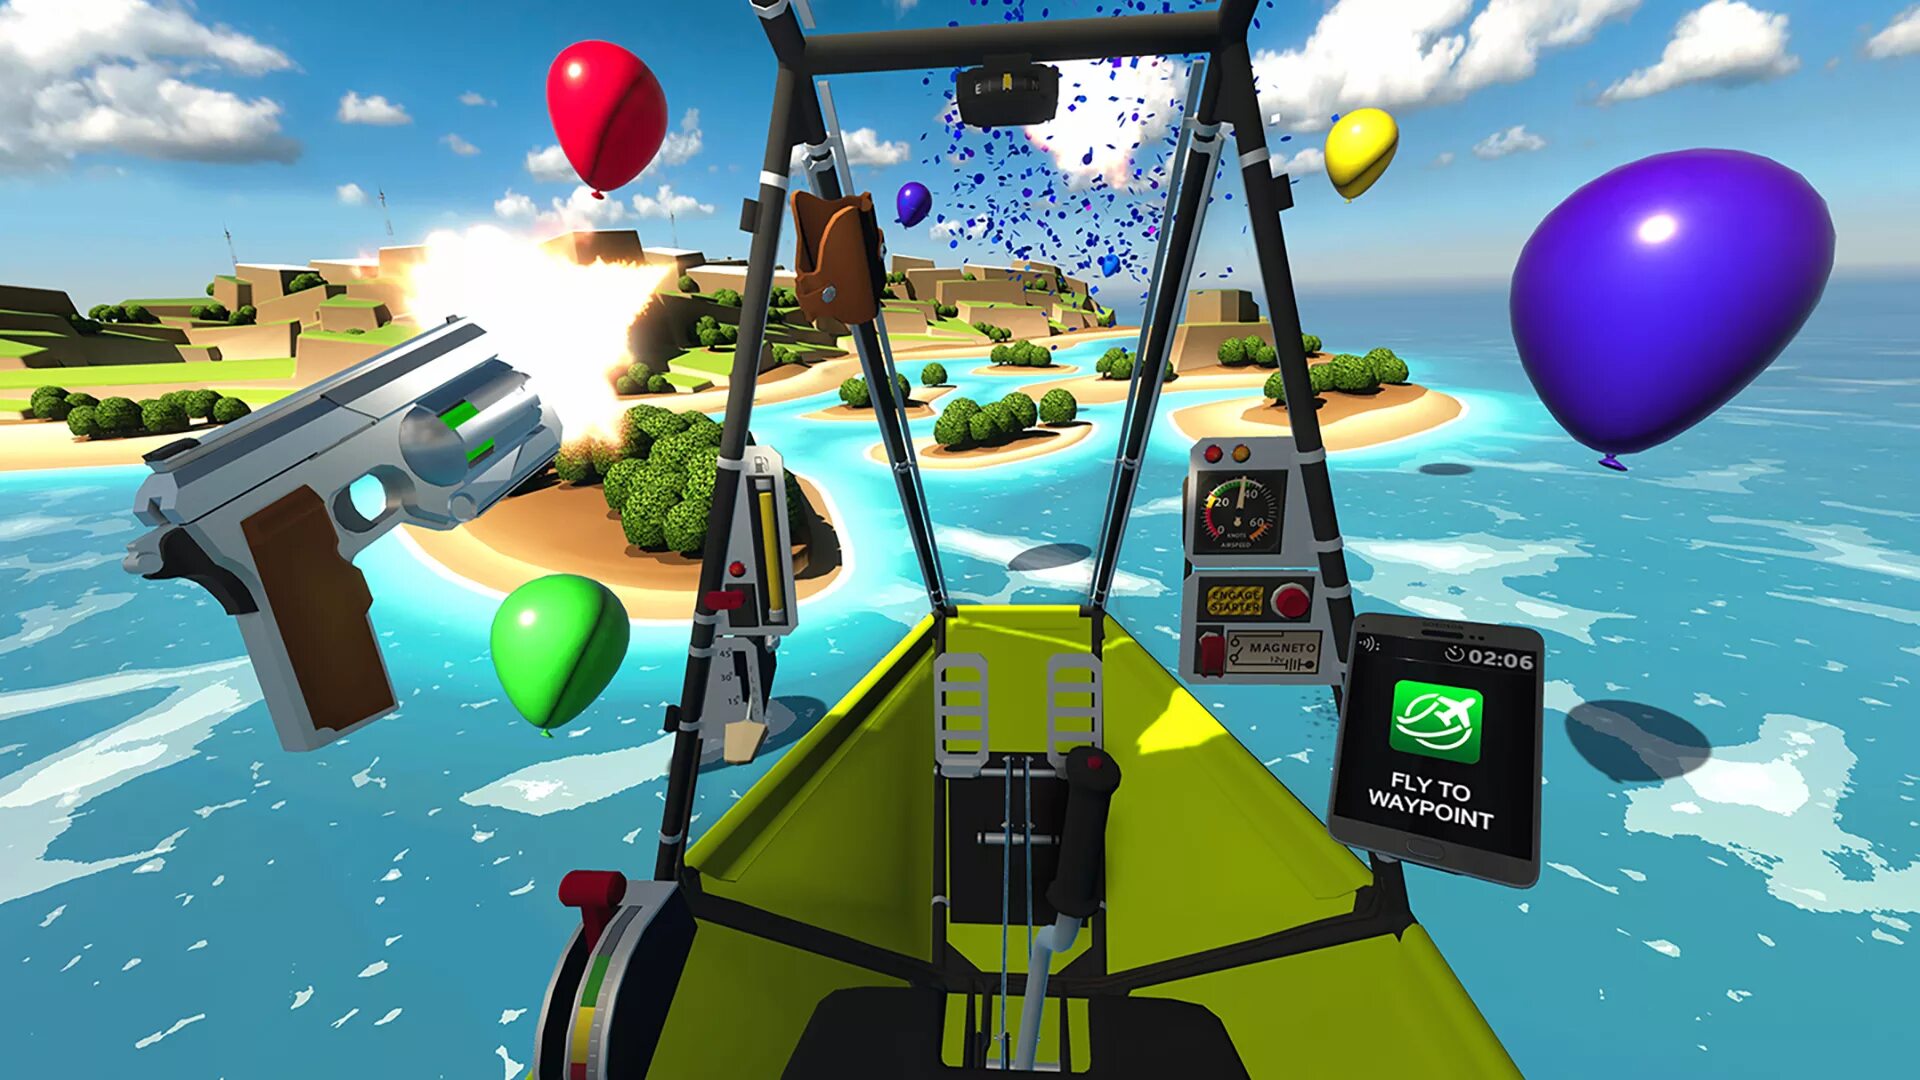 Игра летать по планетам. Бурение планет игра. Хай флэт игра. Симулятор полёта на дельтаплане PSVR. Ultra Wings 2 VR.